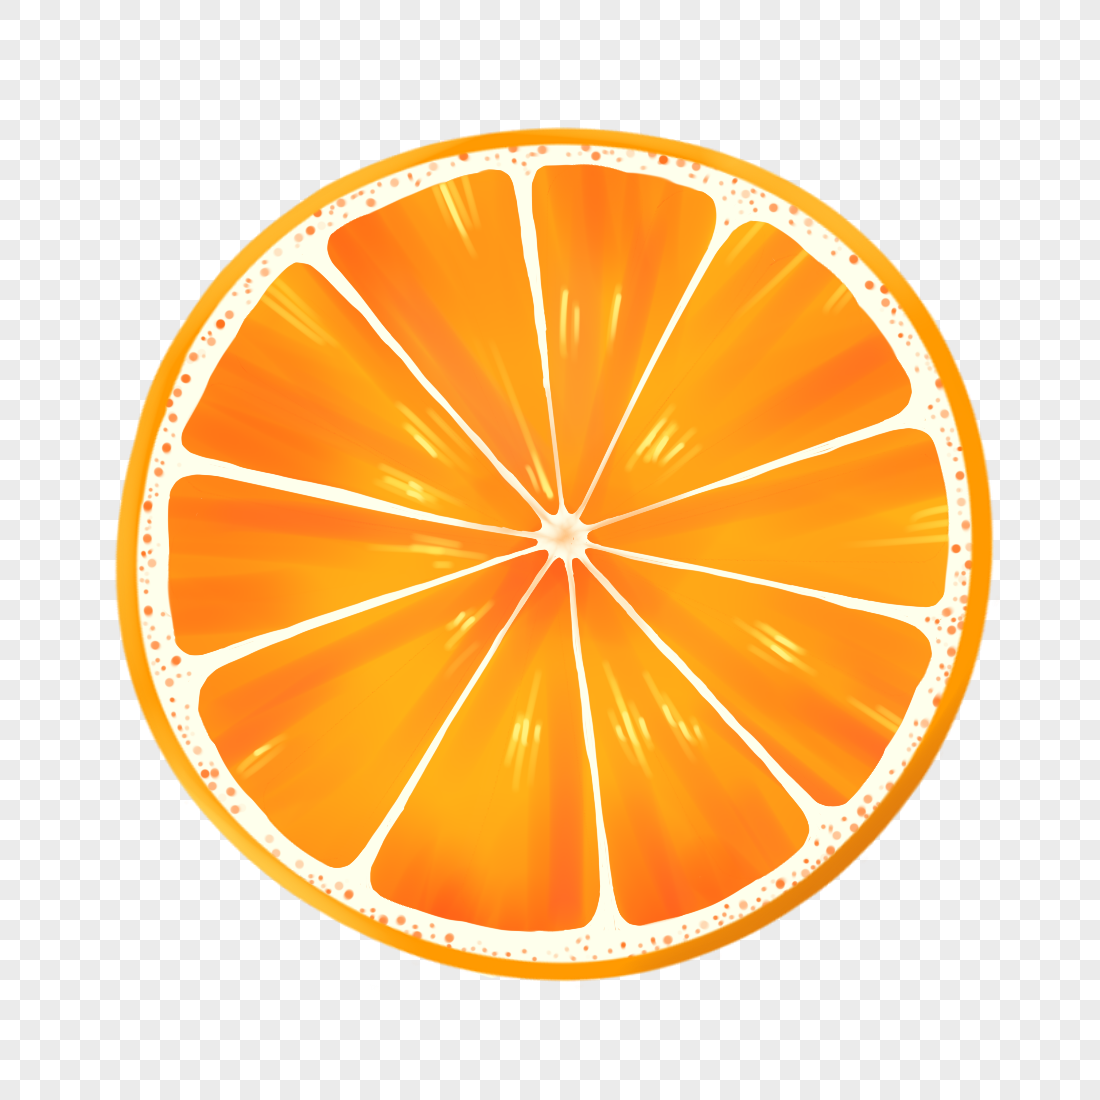 orange slice transparent background